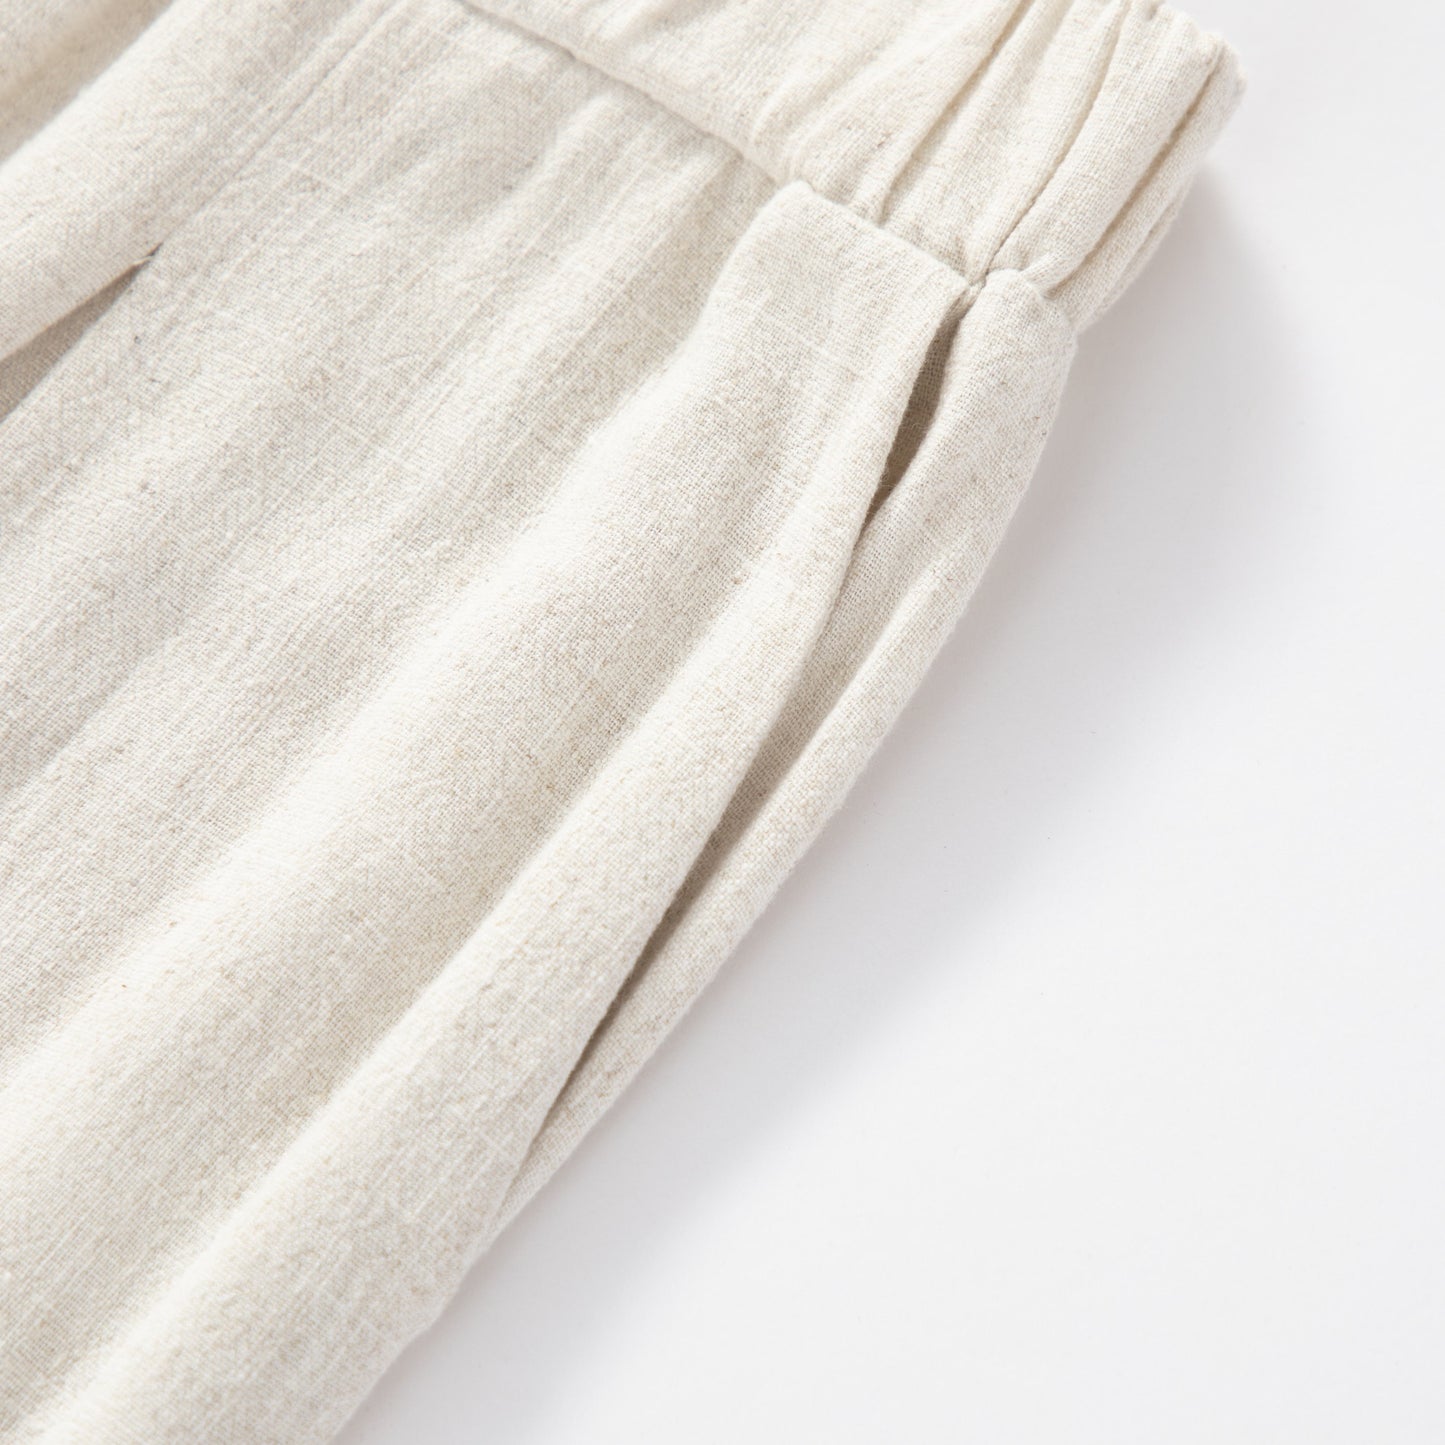 Pantalones holgados de lino sedoso de talle alto y ajuste flojo.